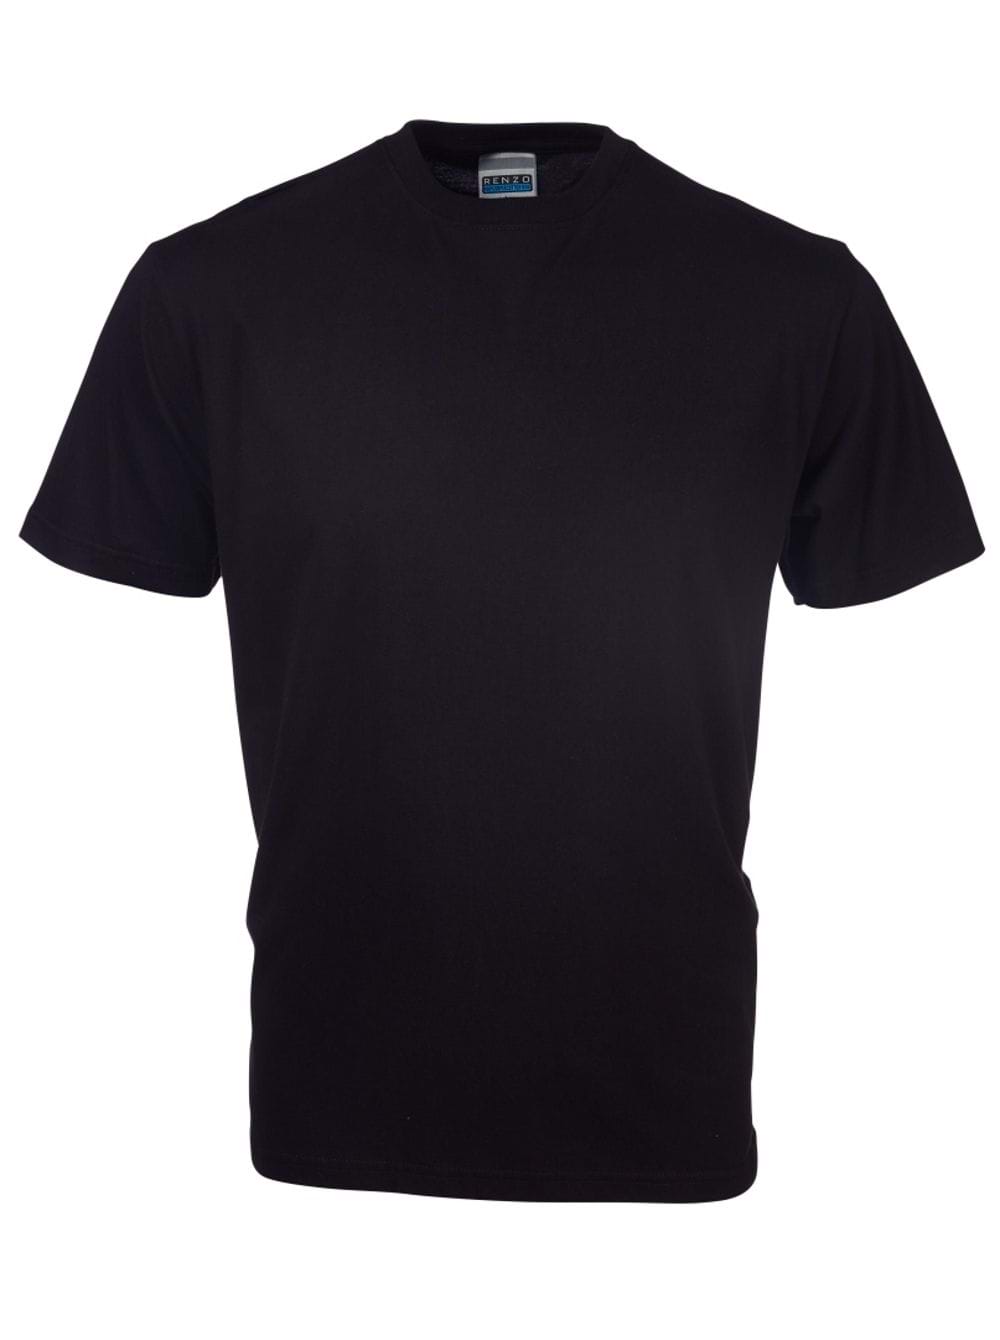 165G Crew Neck T-Shirt - Black / SS